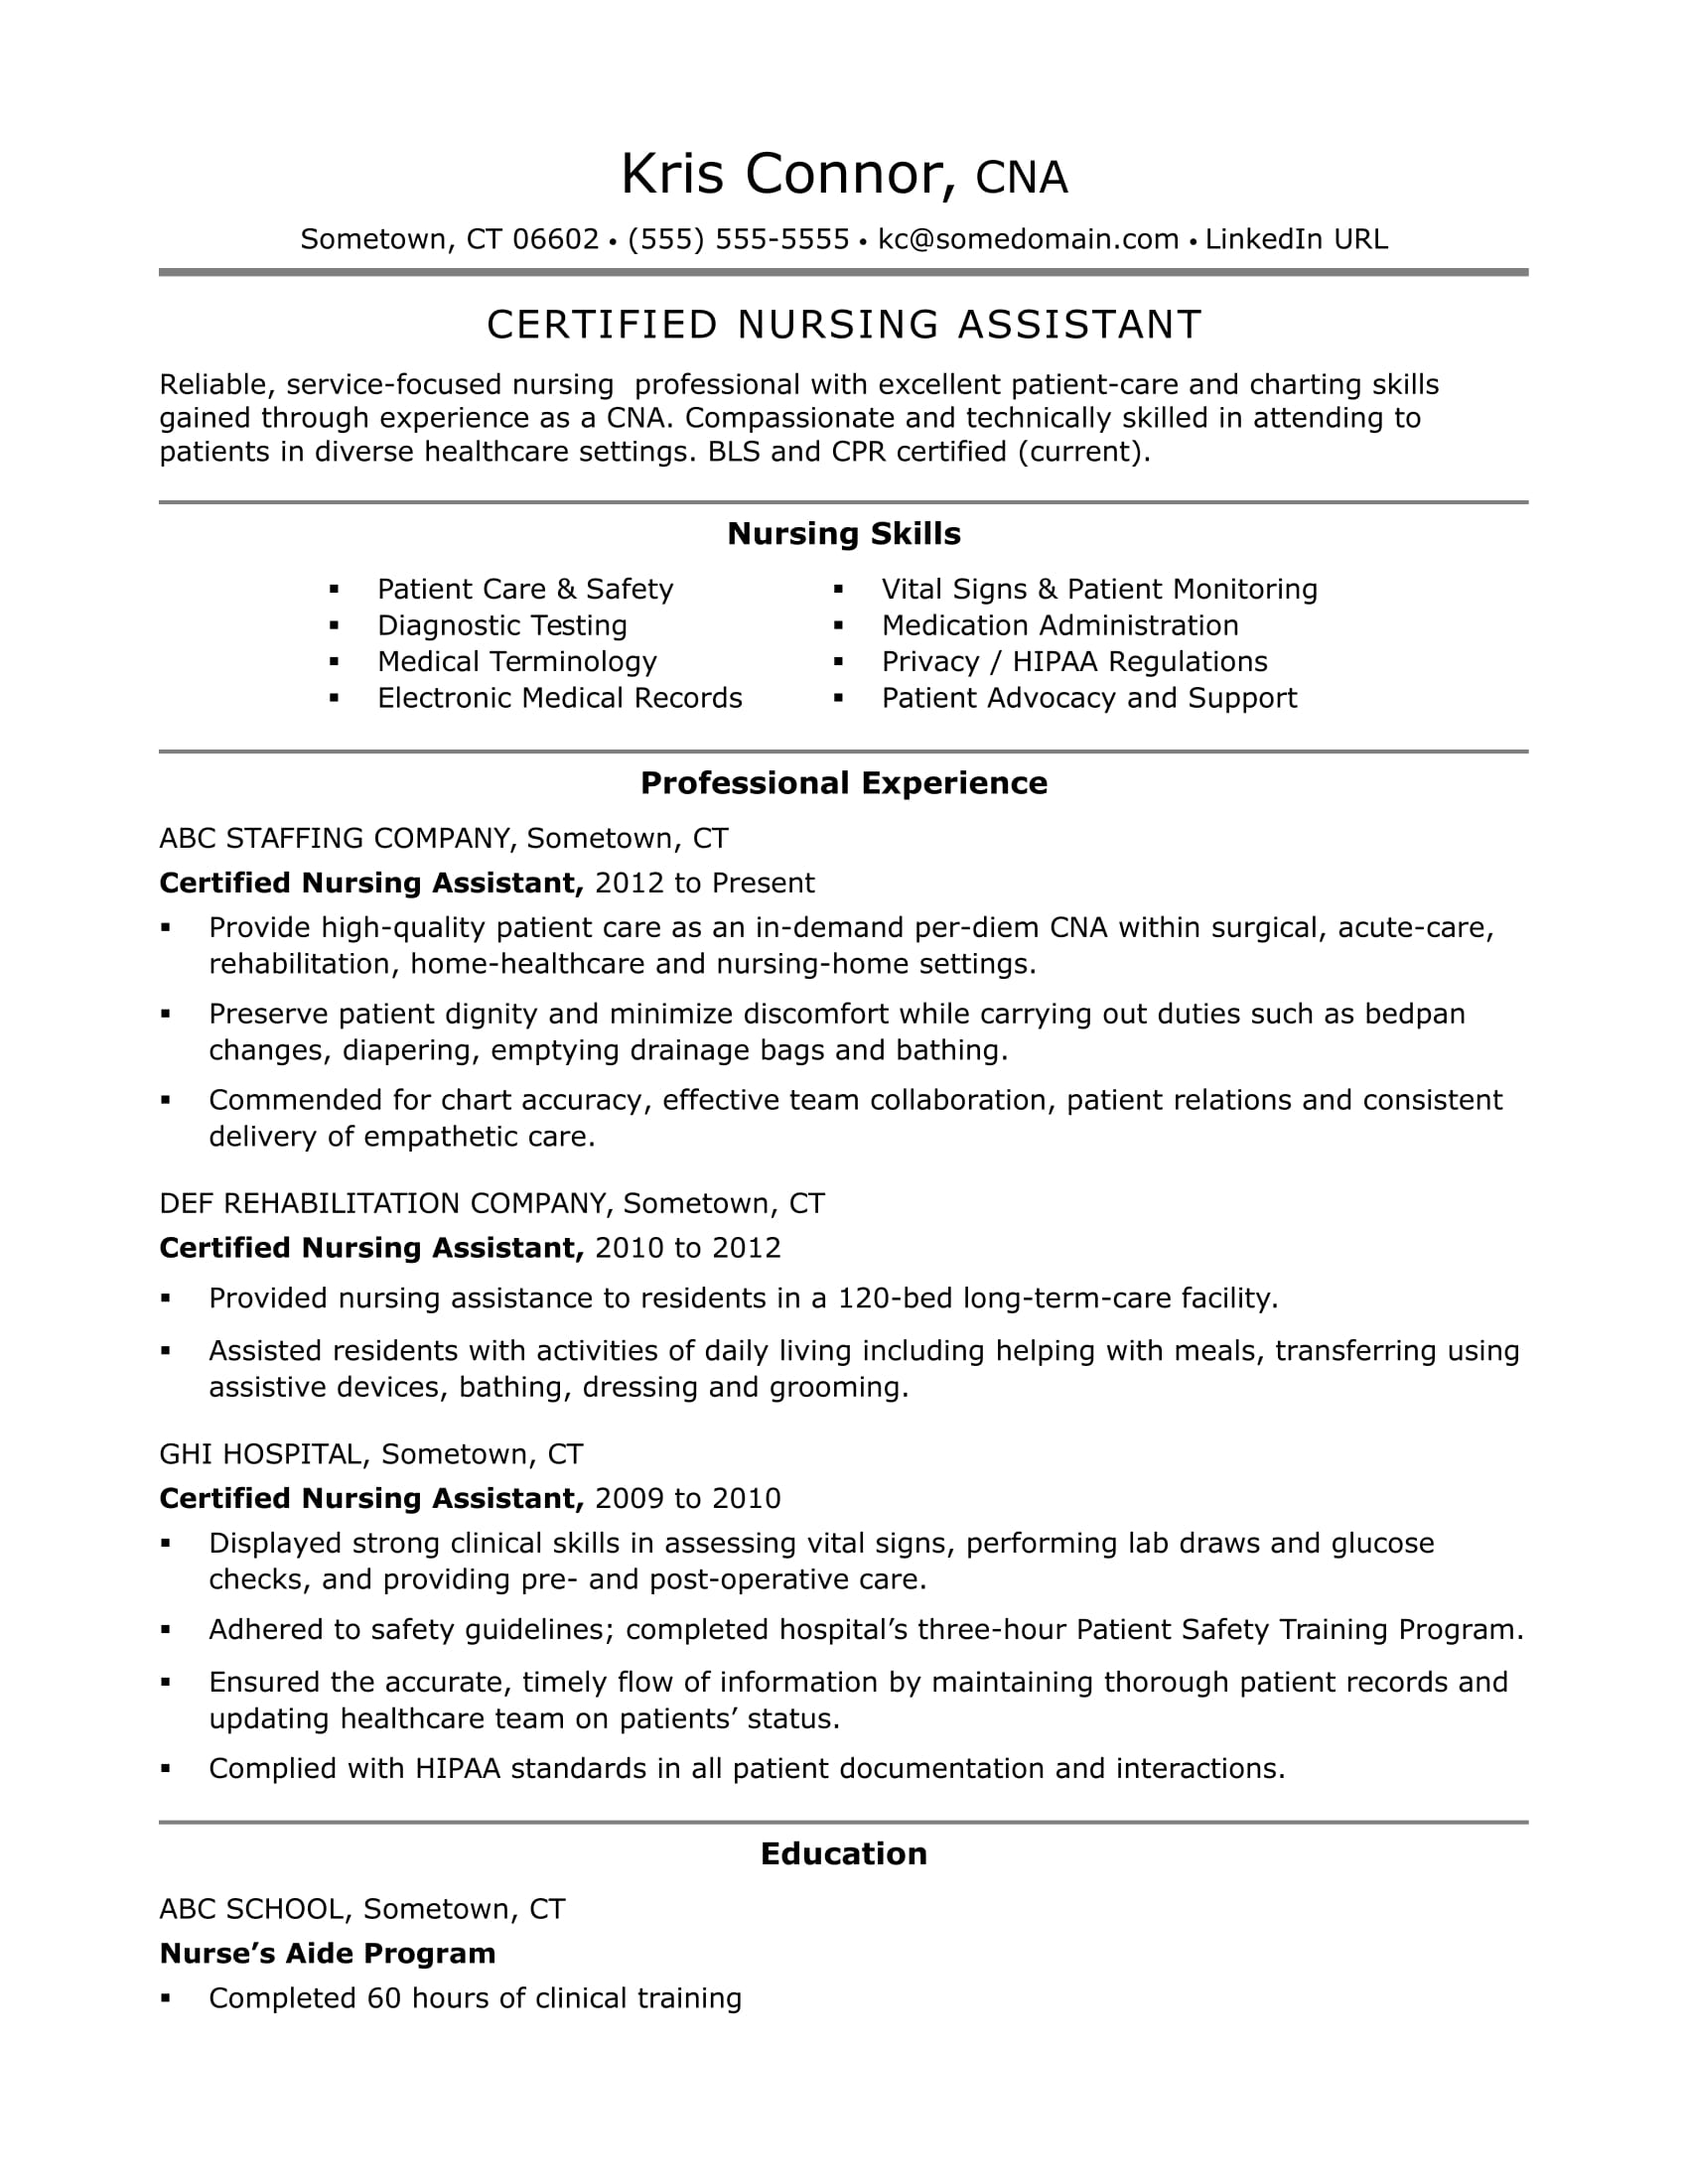 Nursing Assistant Resume Cna Resume Examples Skills For Cnas Monster